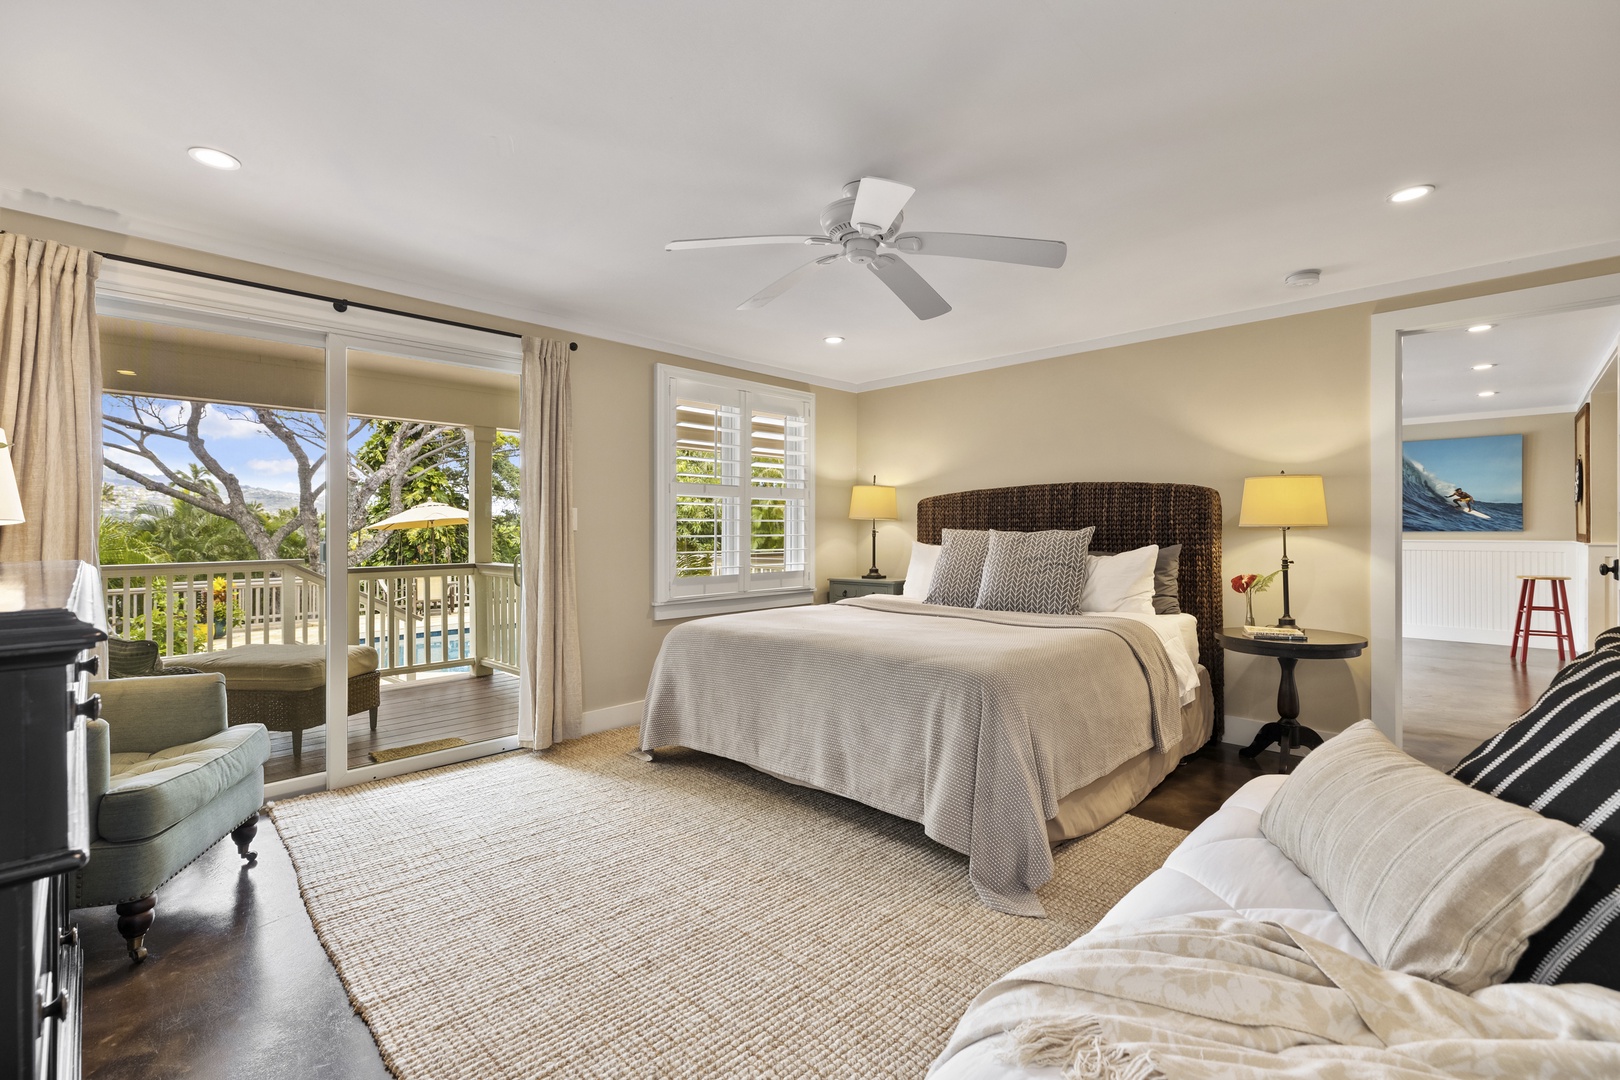 Honolulu Vacation Rentals, Hale Le'ahi - Guest bedroom 2 with pool views